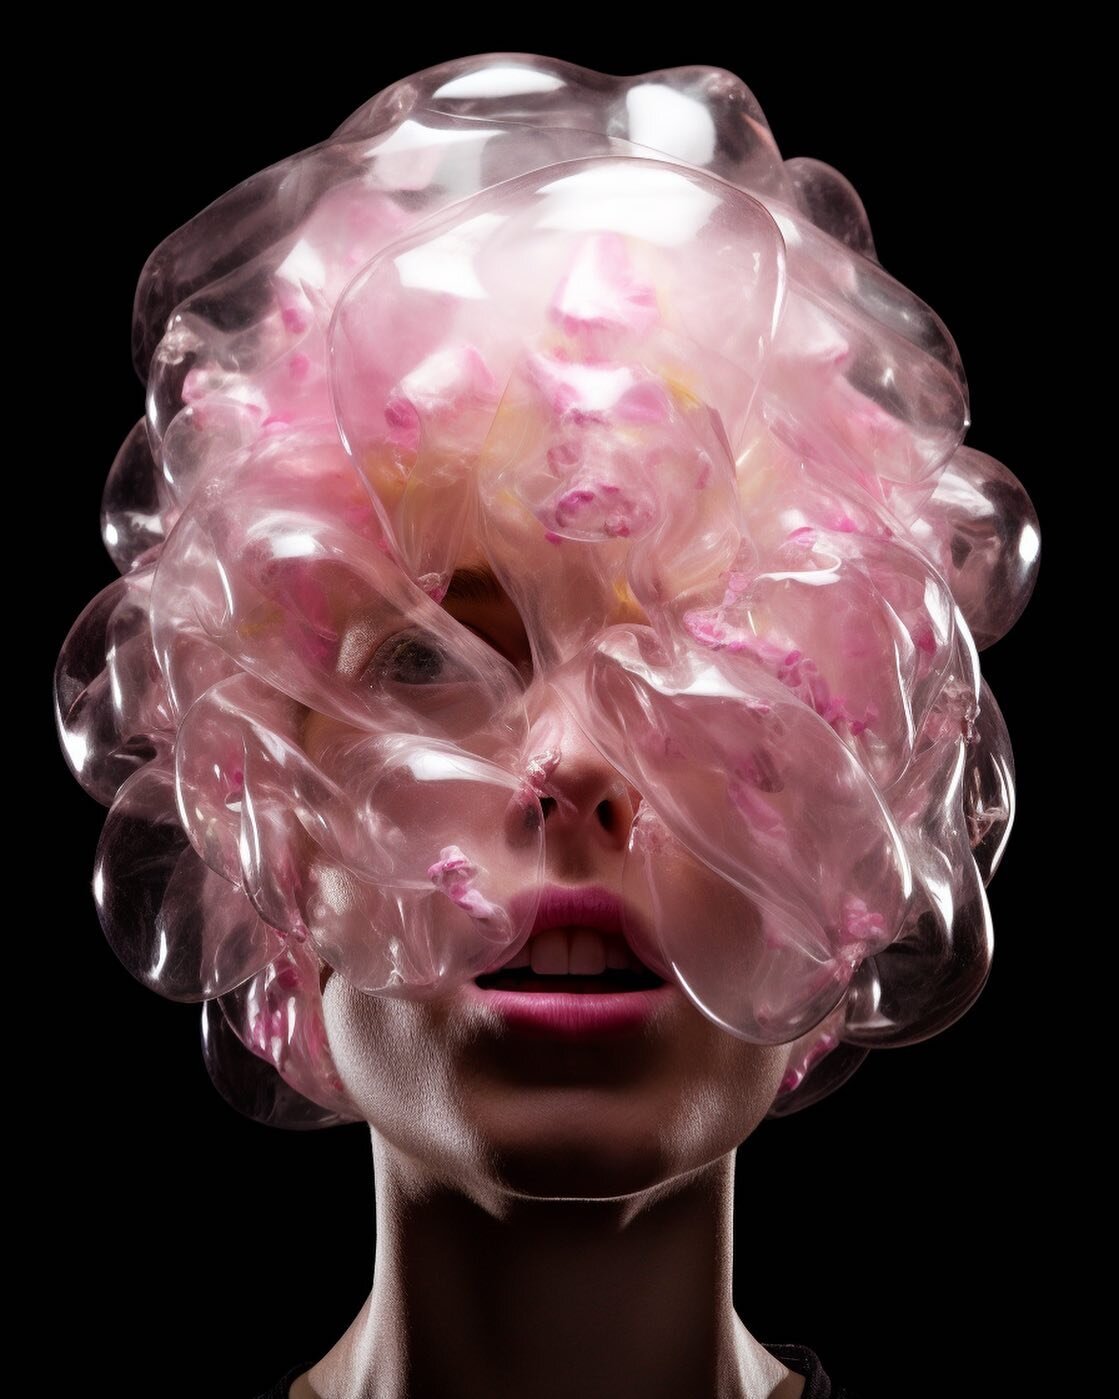 Bubble Wrap #ai #midjourney #aiart #synthography #midjourneyart #art #digitalart #synthography #midjourneycrew #midjourneyv5 #generativeart #pink #girl #women #bubble #bubbles #bubblewrap #portrait #weirdart